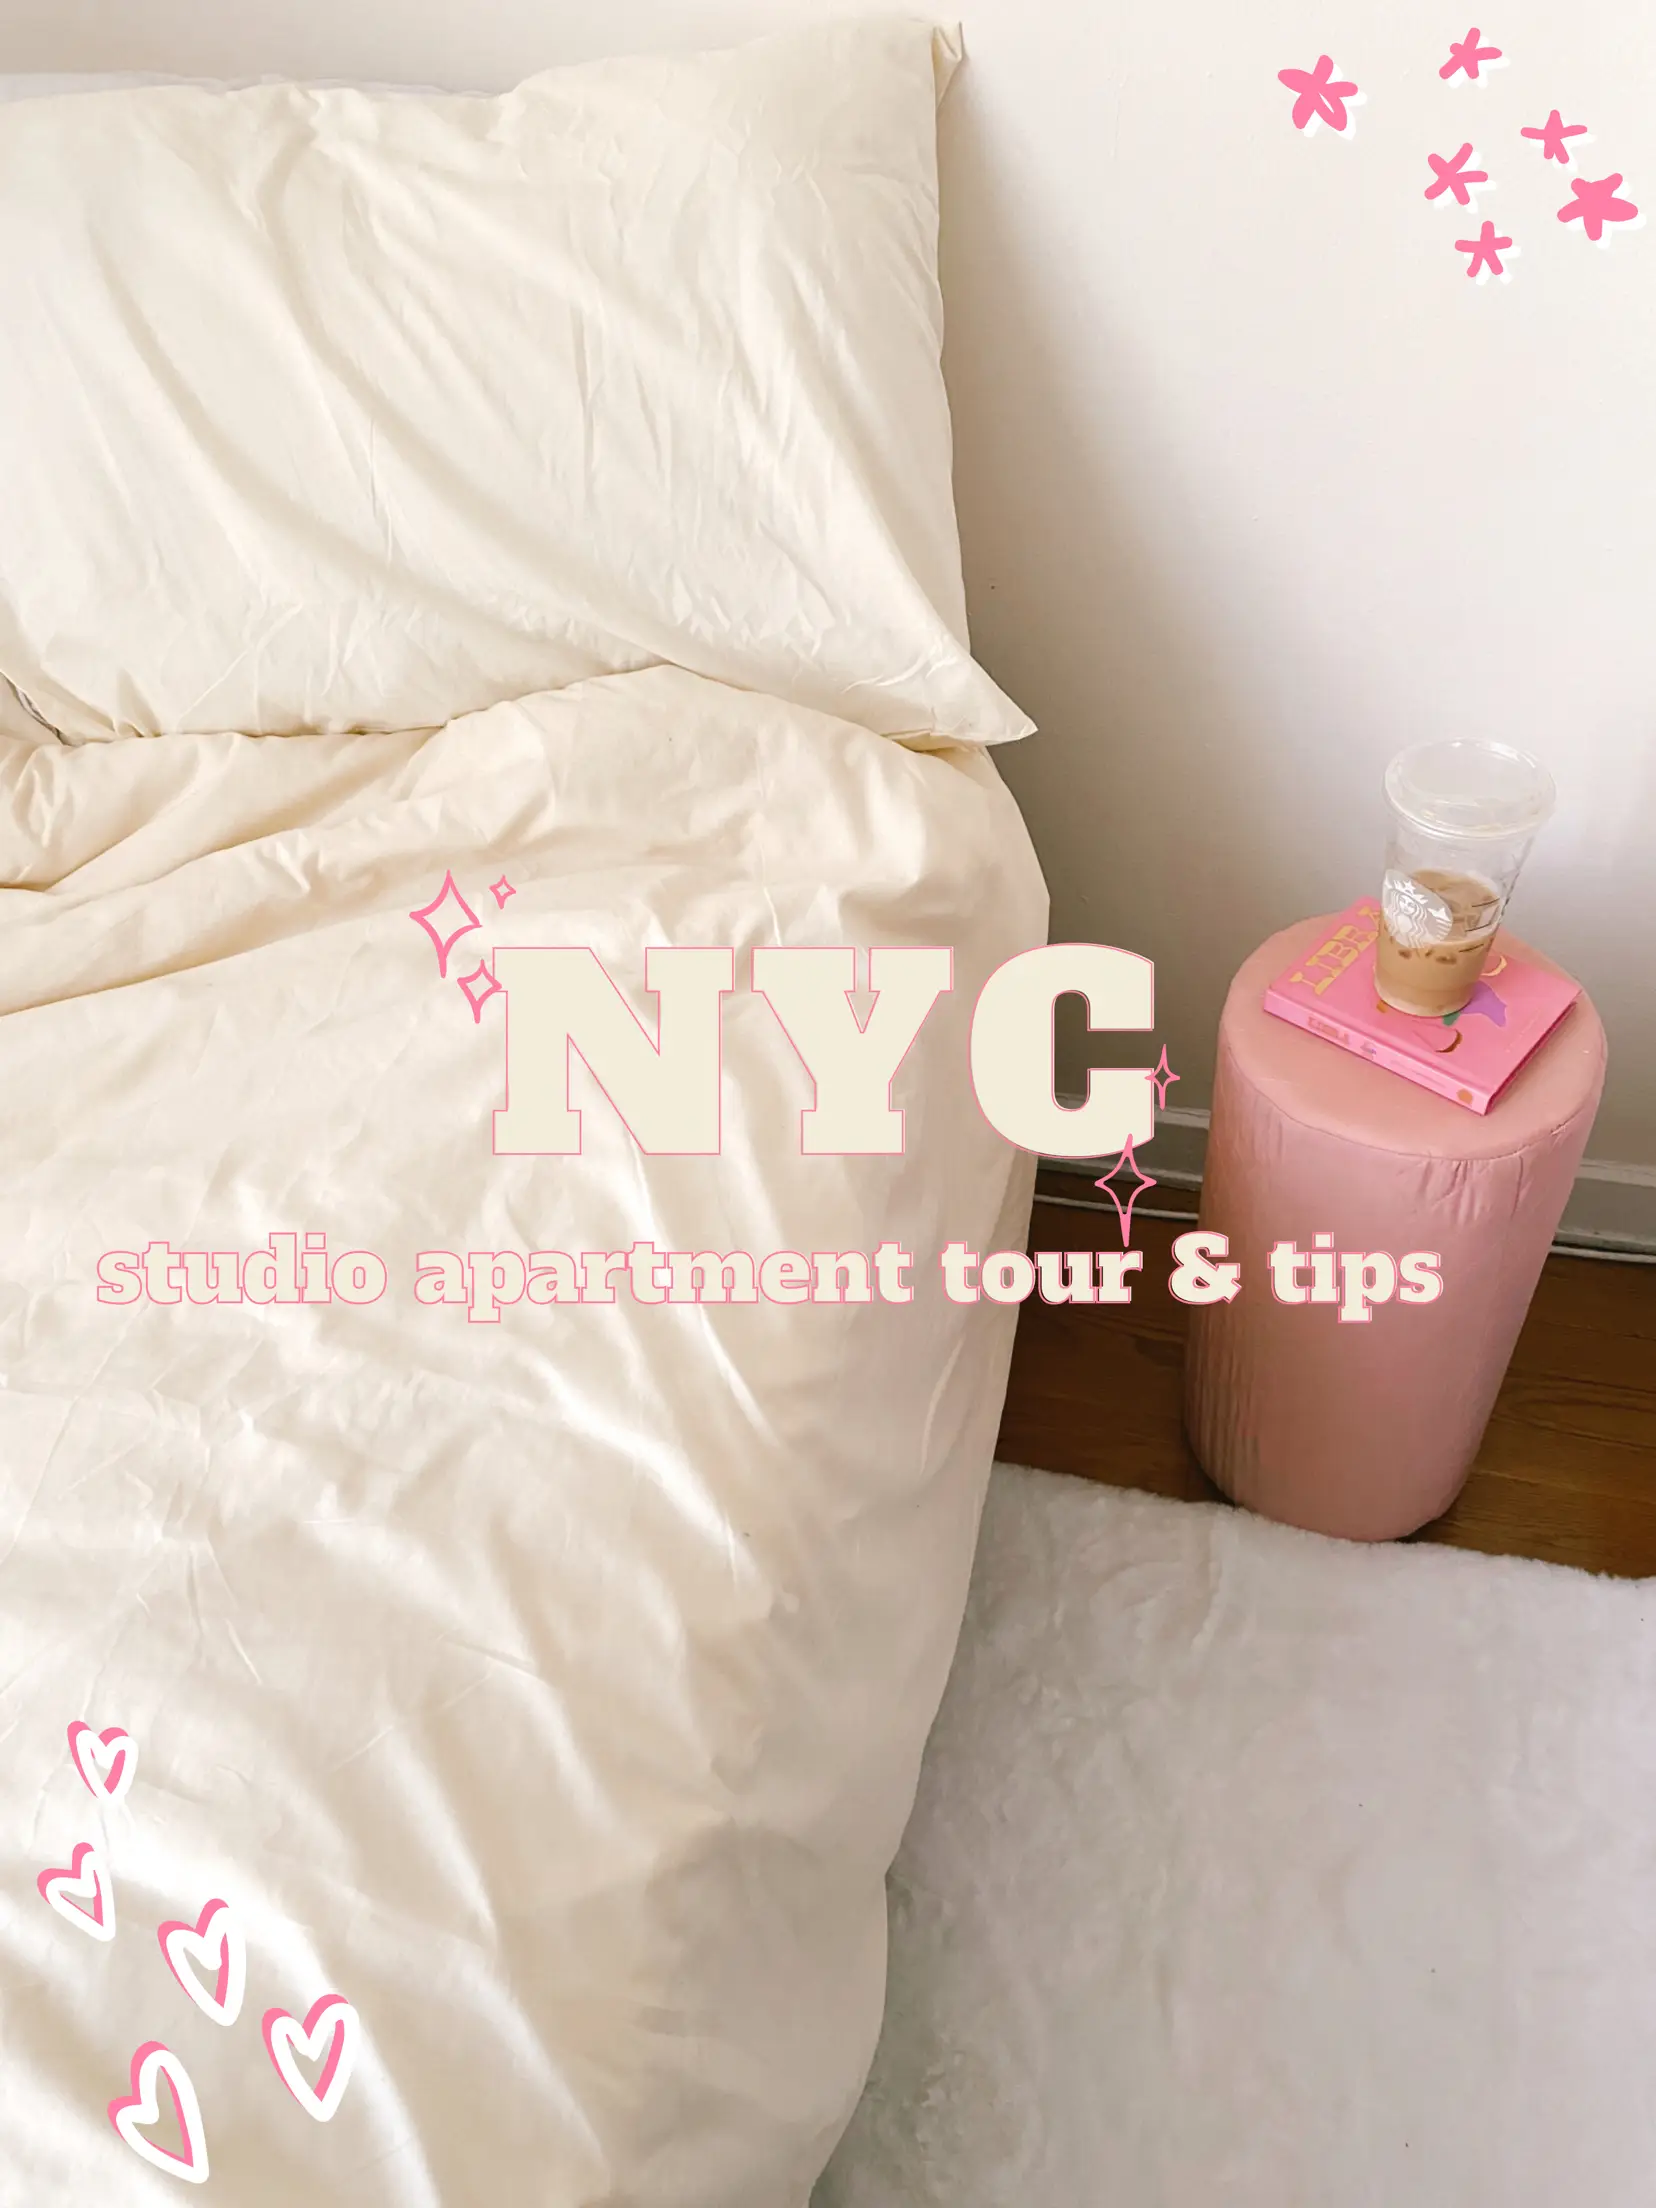 NYC Studio Apartment Tour & Tips's images